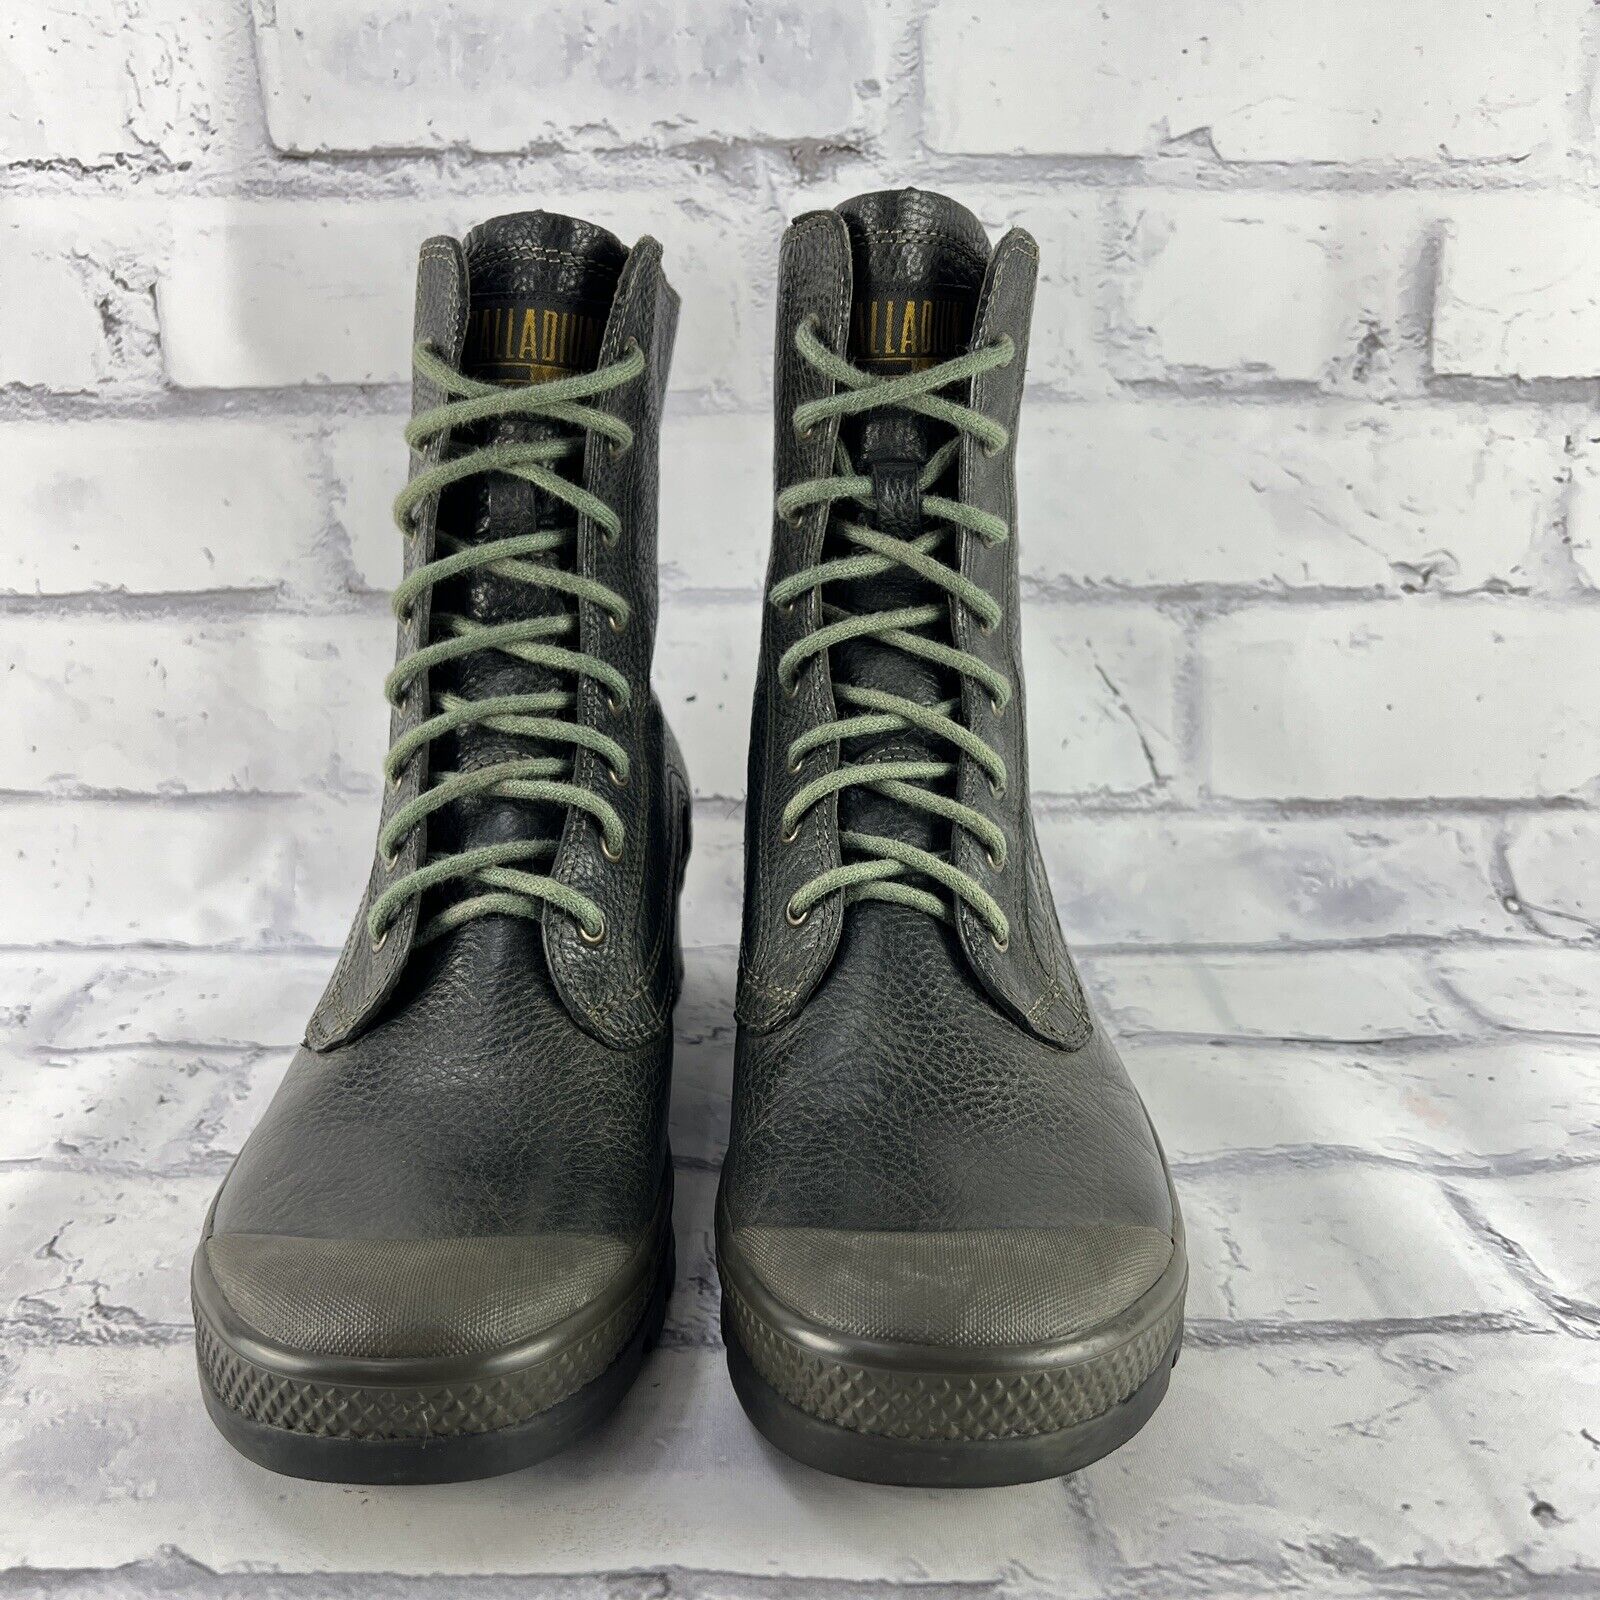 Palladium Pallabase Leather Women's Boots Sz US 8 EU 39 Dark Olive Green Combat